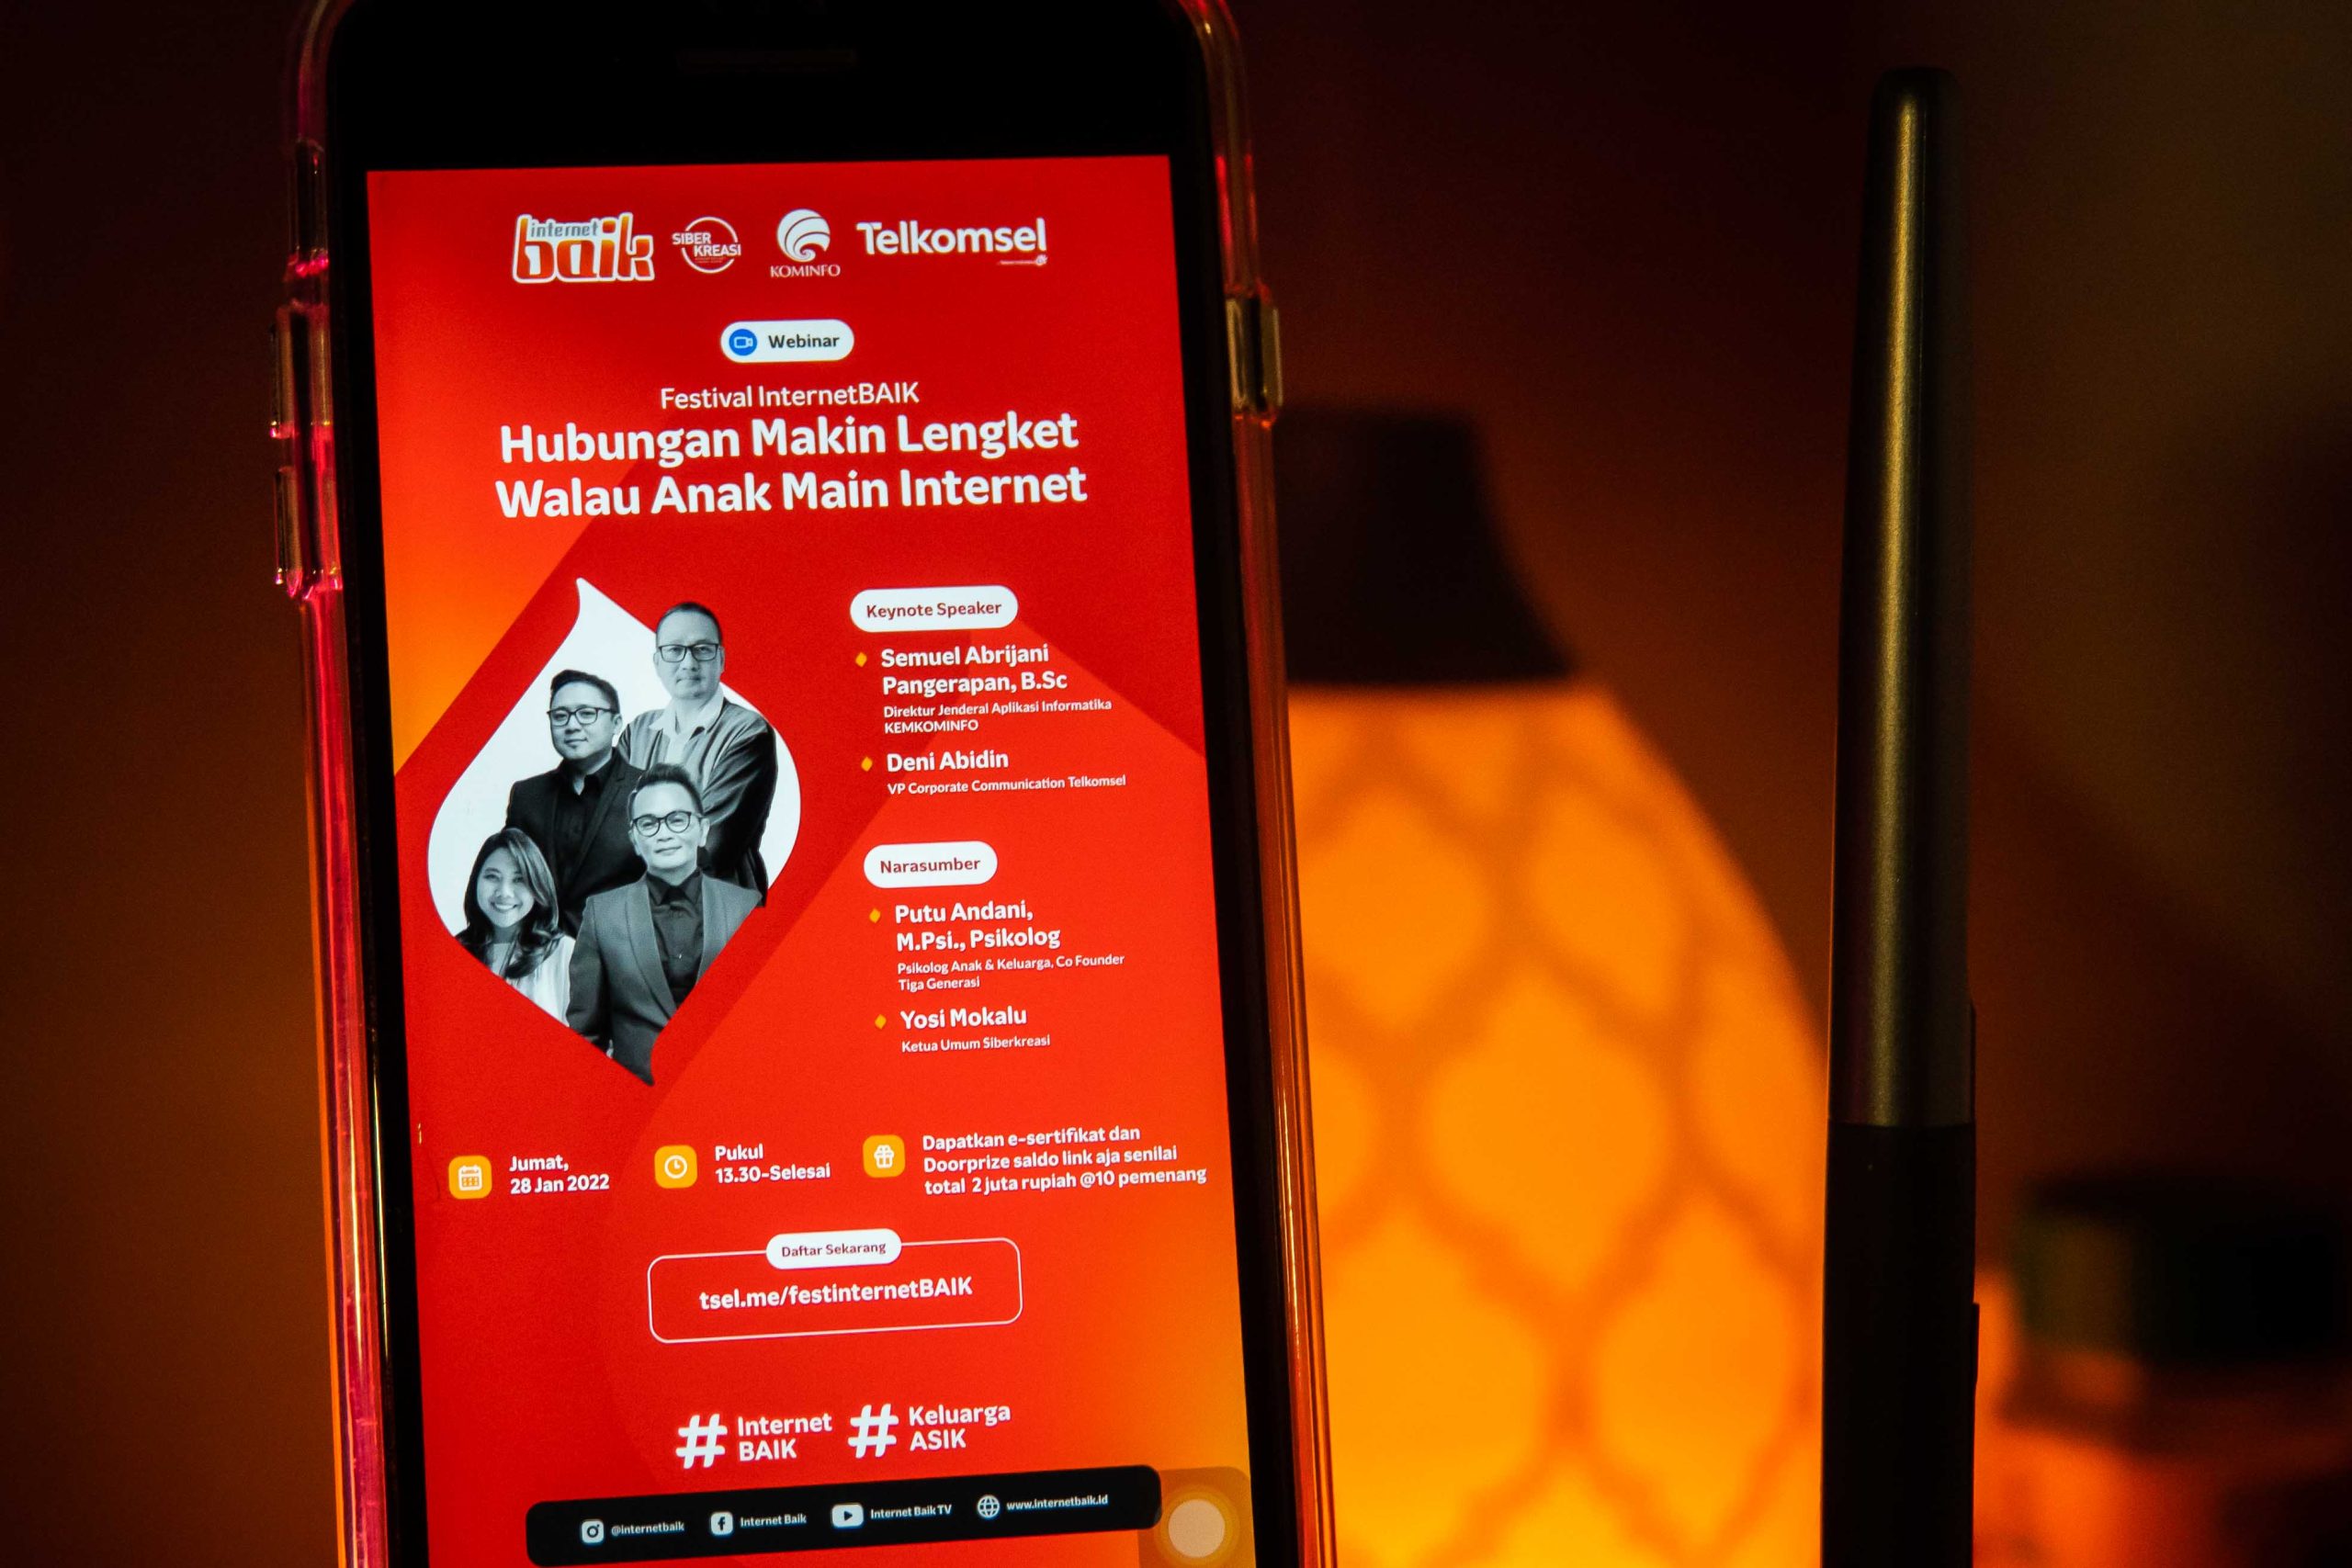 Telkomsel menyelenggarakan Webinar Festival InternetBAIK bertema “Hubungan Makin Lengket, Walau Anak Main Internet” sebagai pembuka rangkaian kampanye #InternetBAIK di tahun ini yang akan hadir setiap bulan mulai Januari hingga Juli 2022. Informasi lebih 